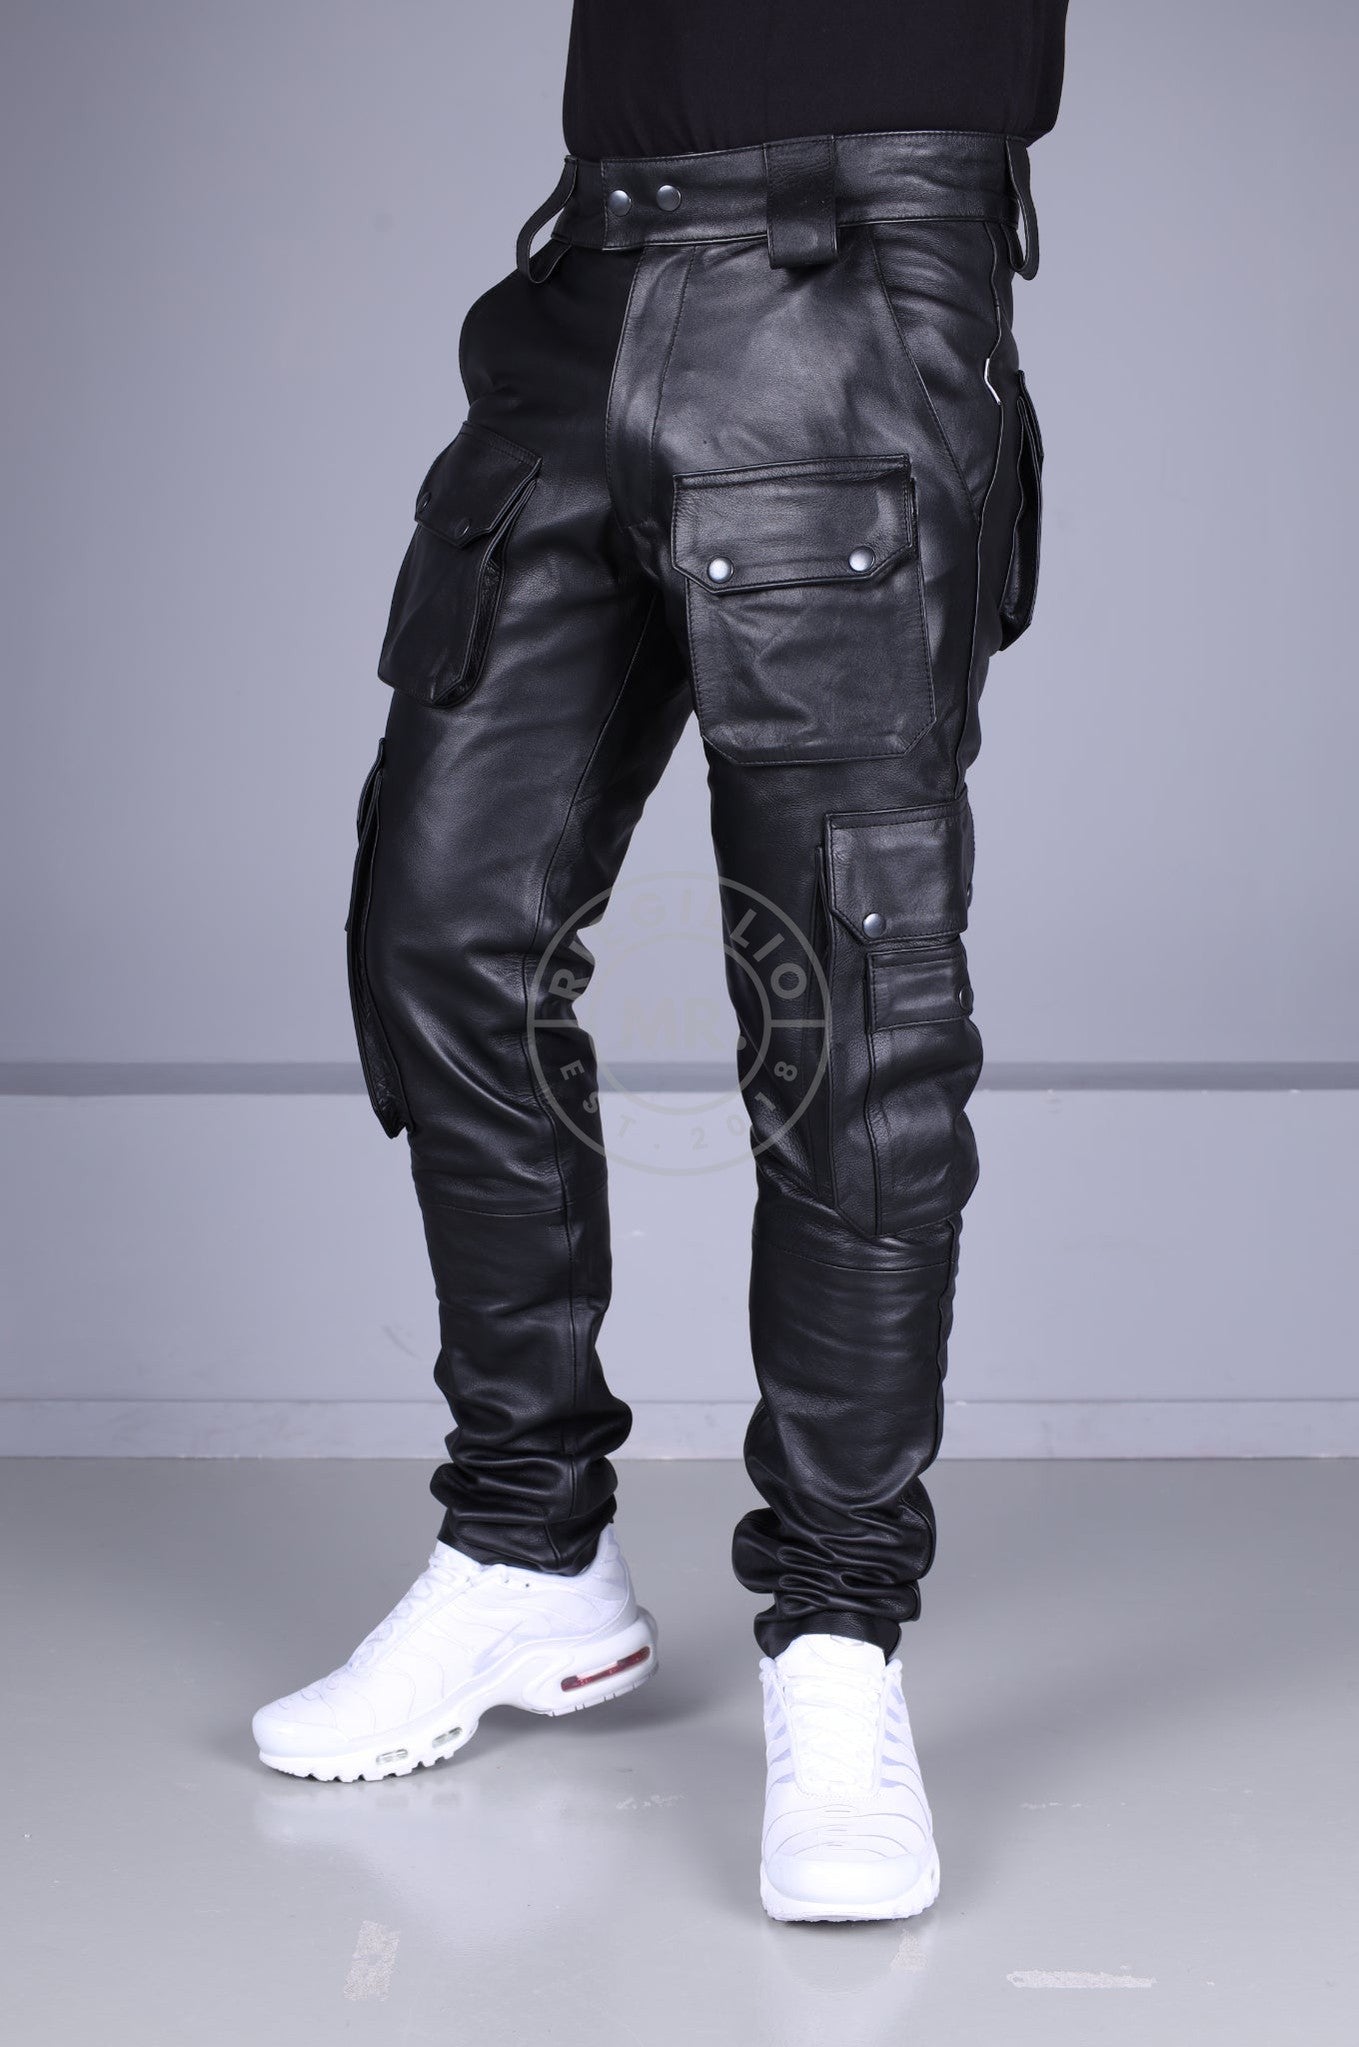 Black Leather Pants - Snap Pockets-at MR. Riegillio